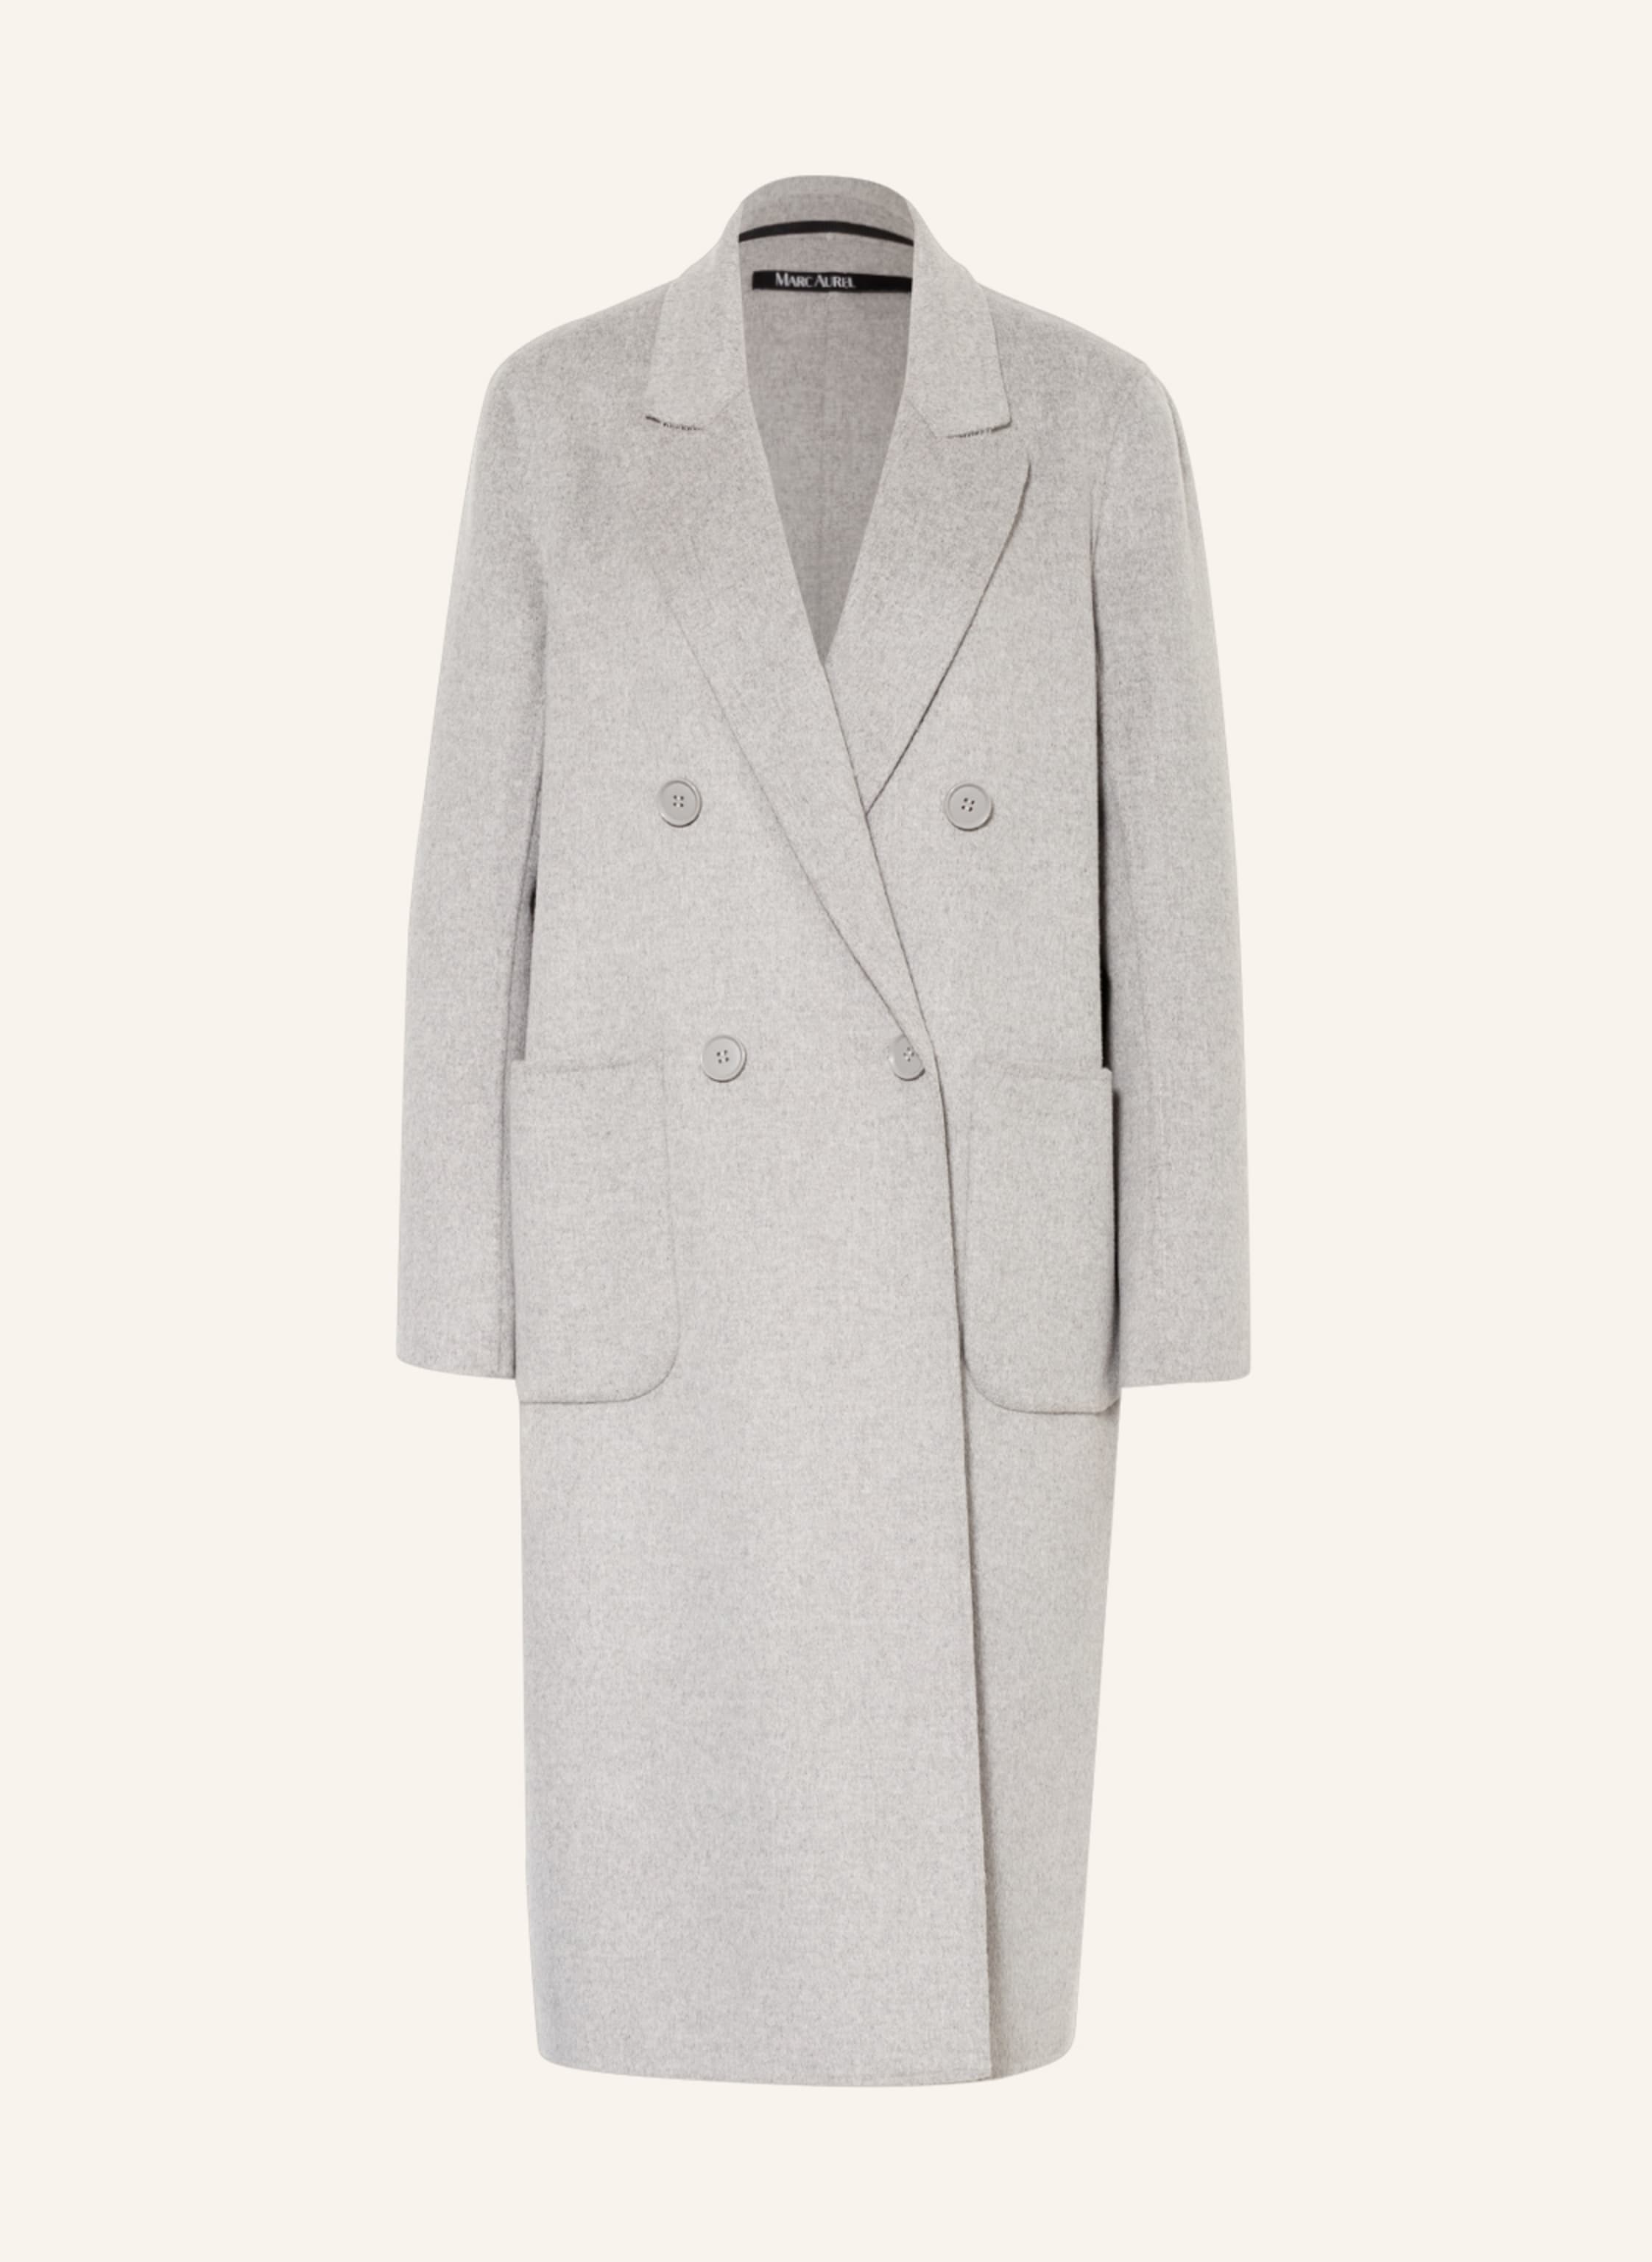 MARC AUREL Coat in light gray | Breuninger